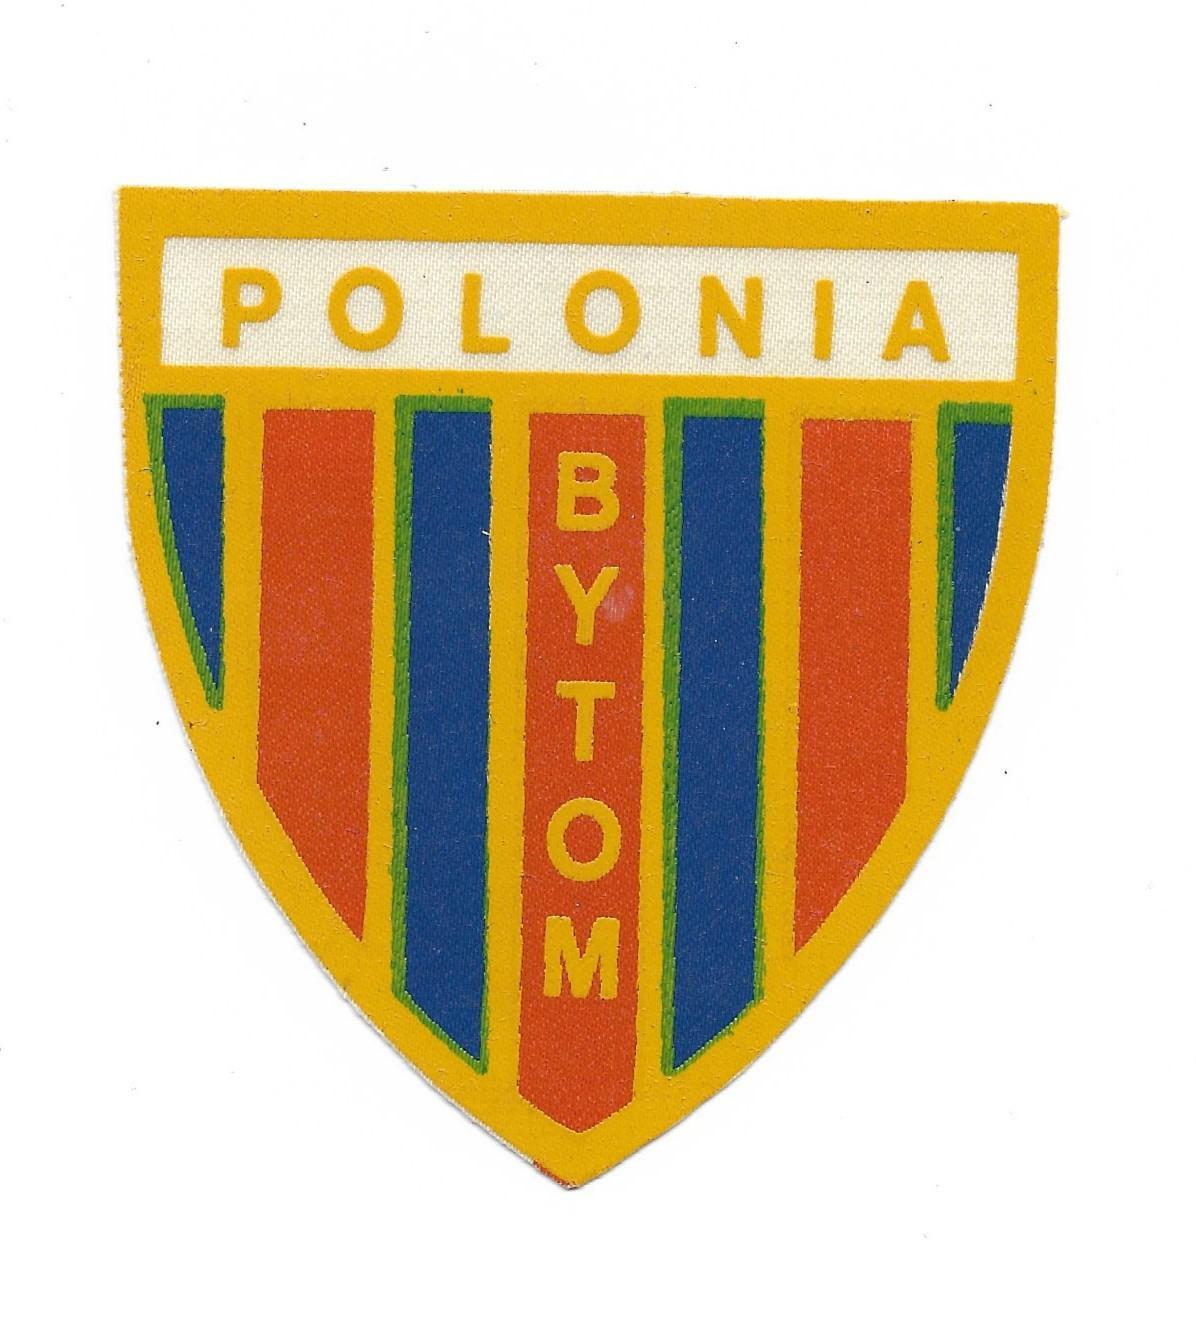 POLONIA_BYTOM_POLSKA_(нашивк а)